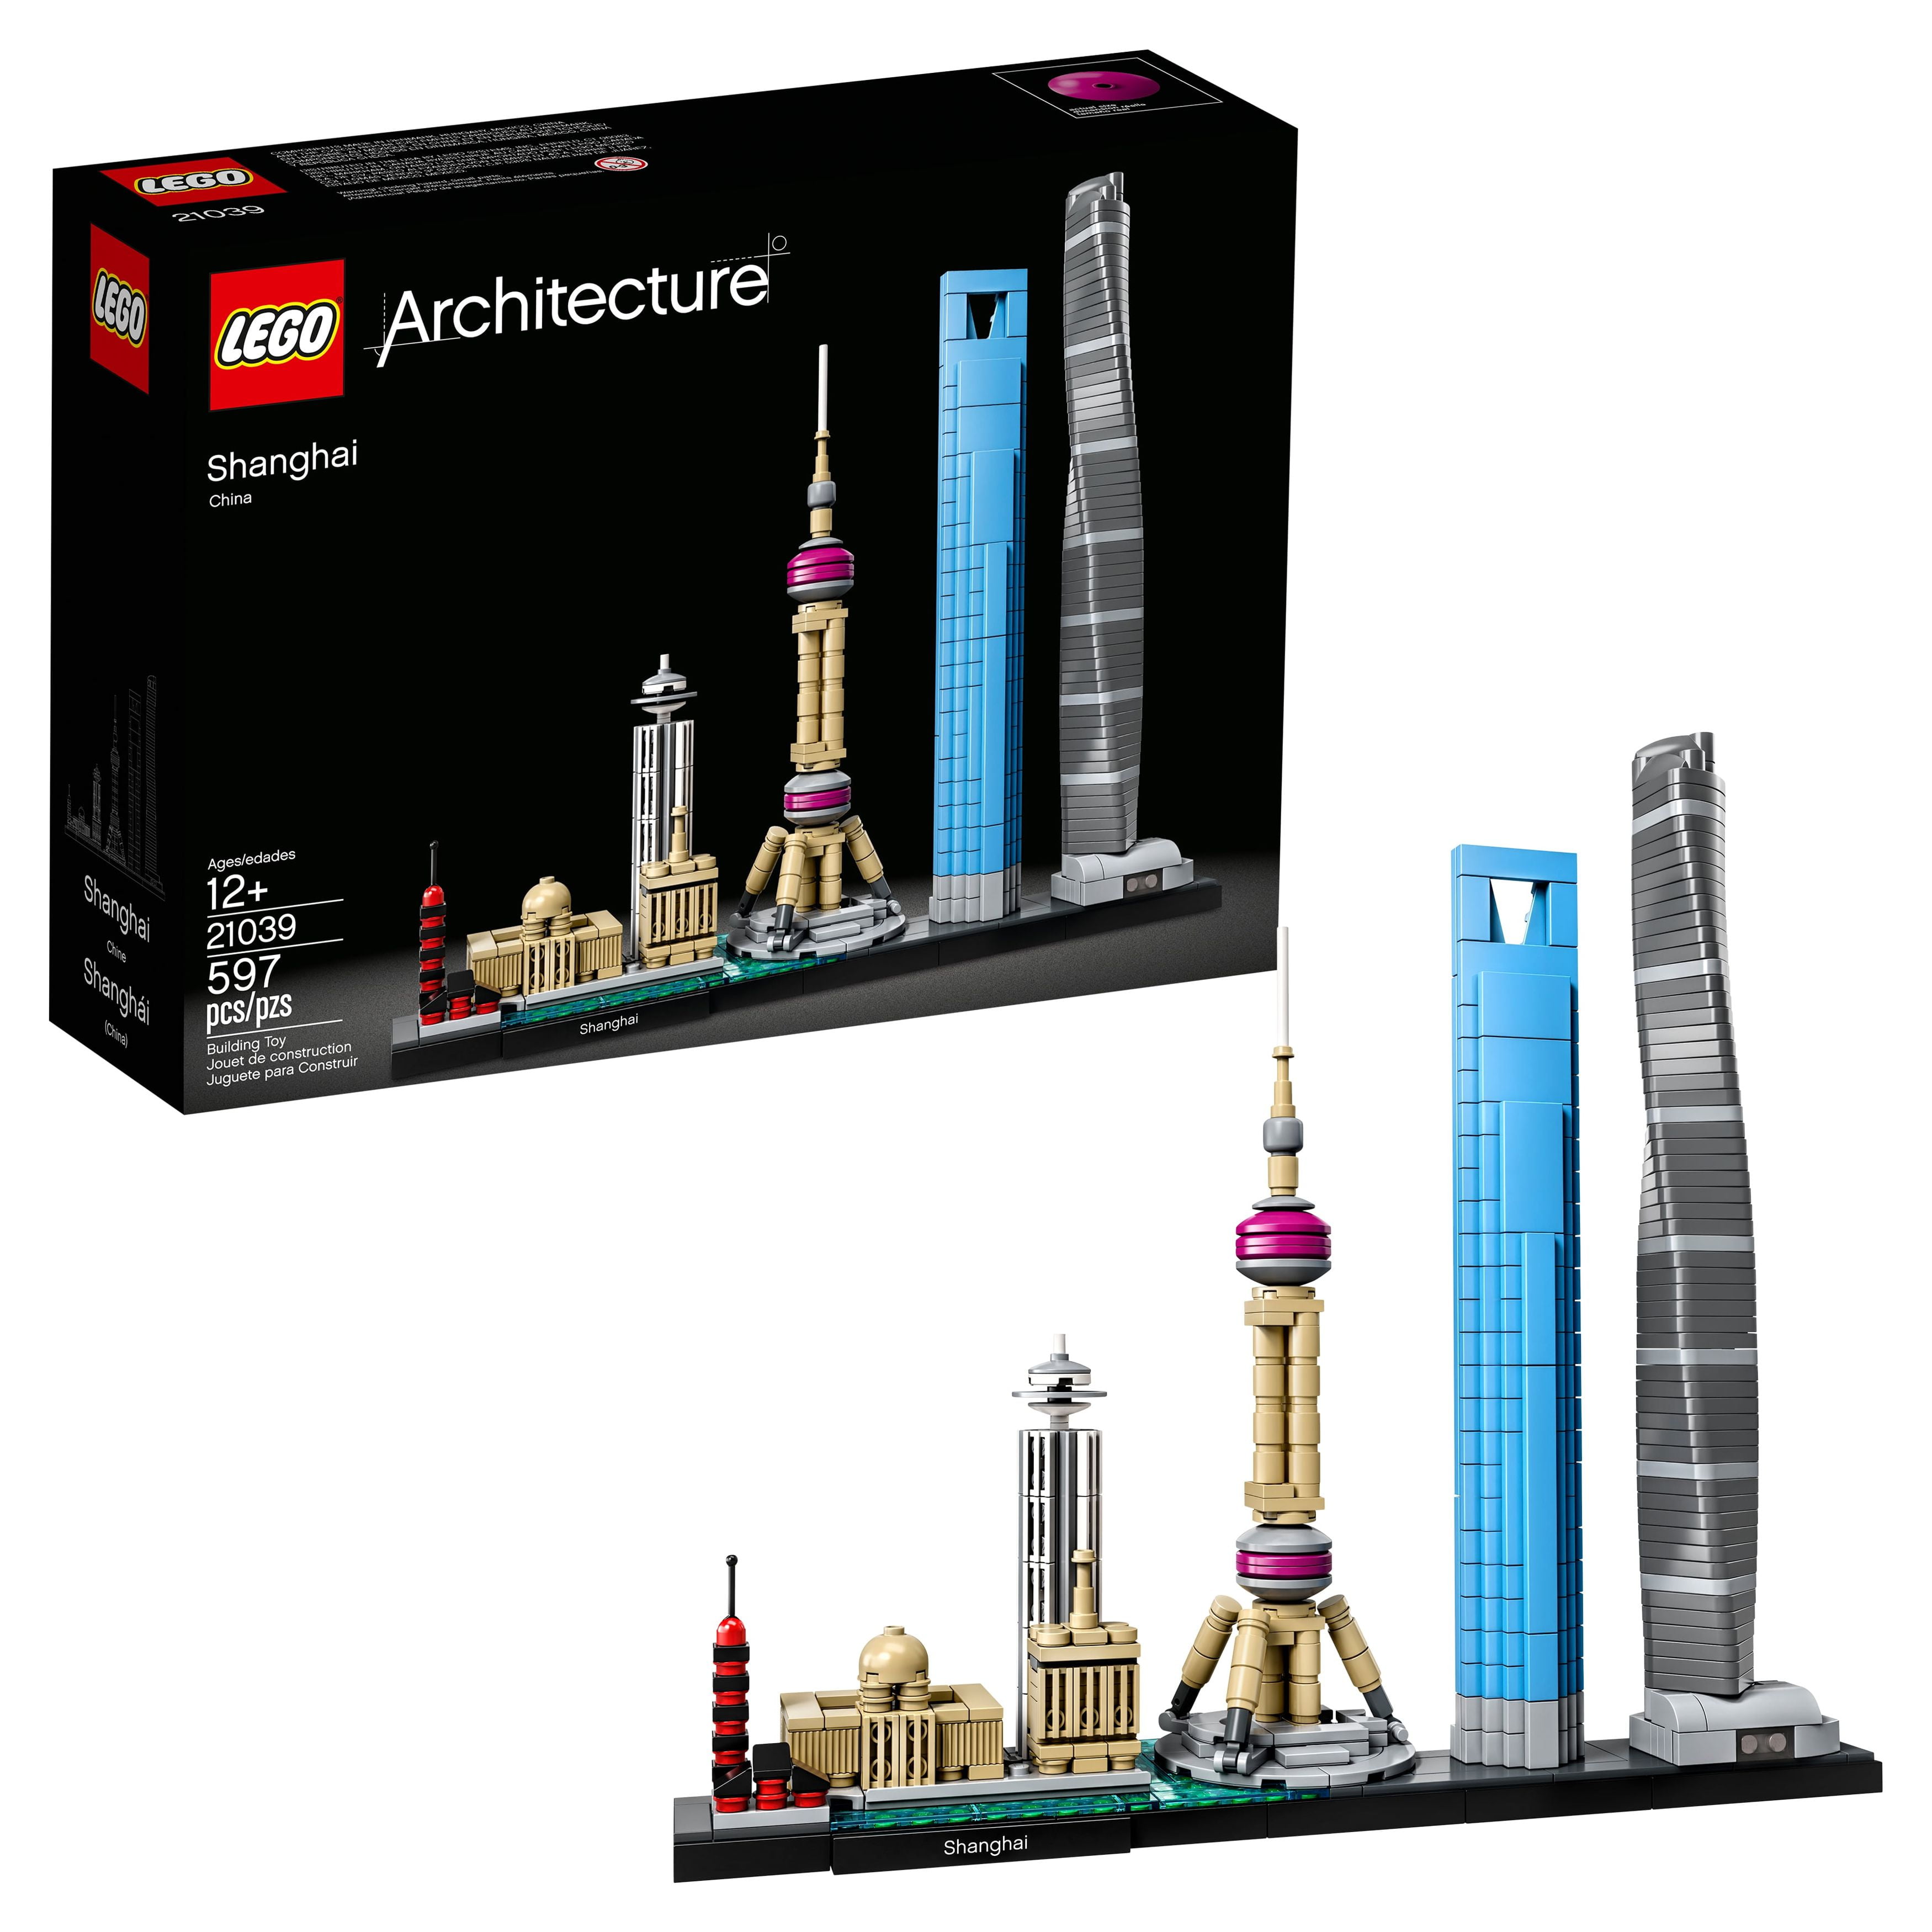  Lego Architecture : Toys & Games